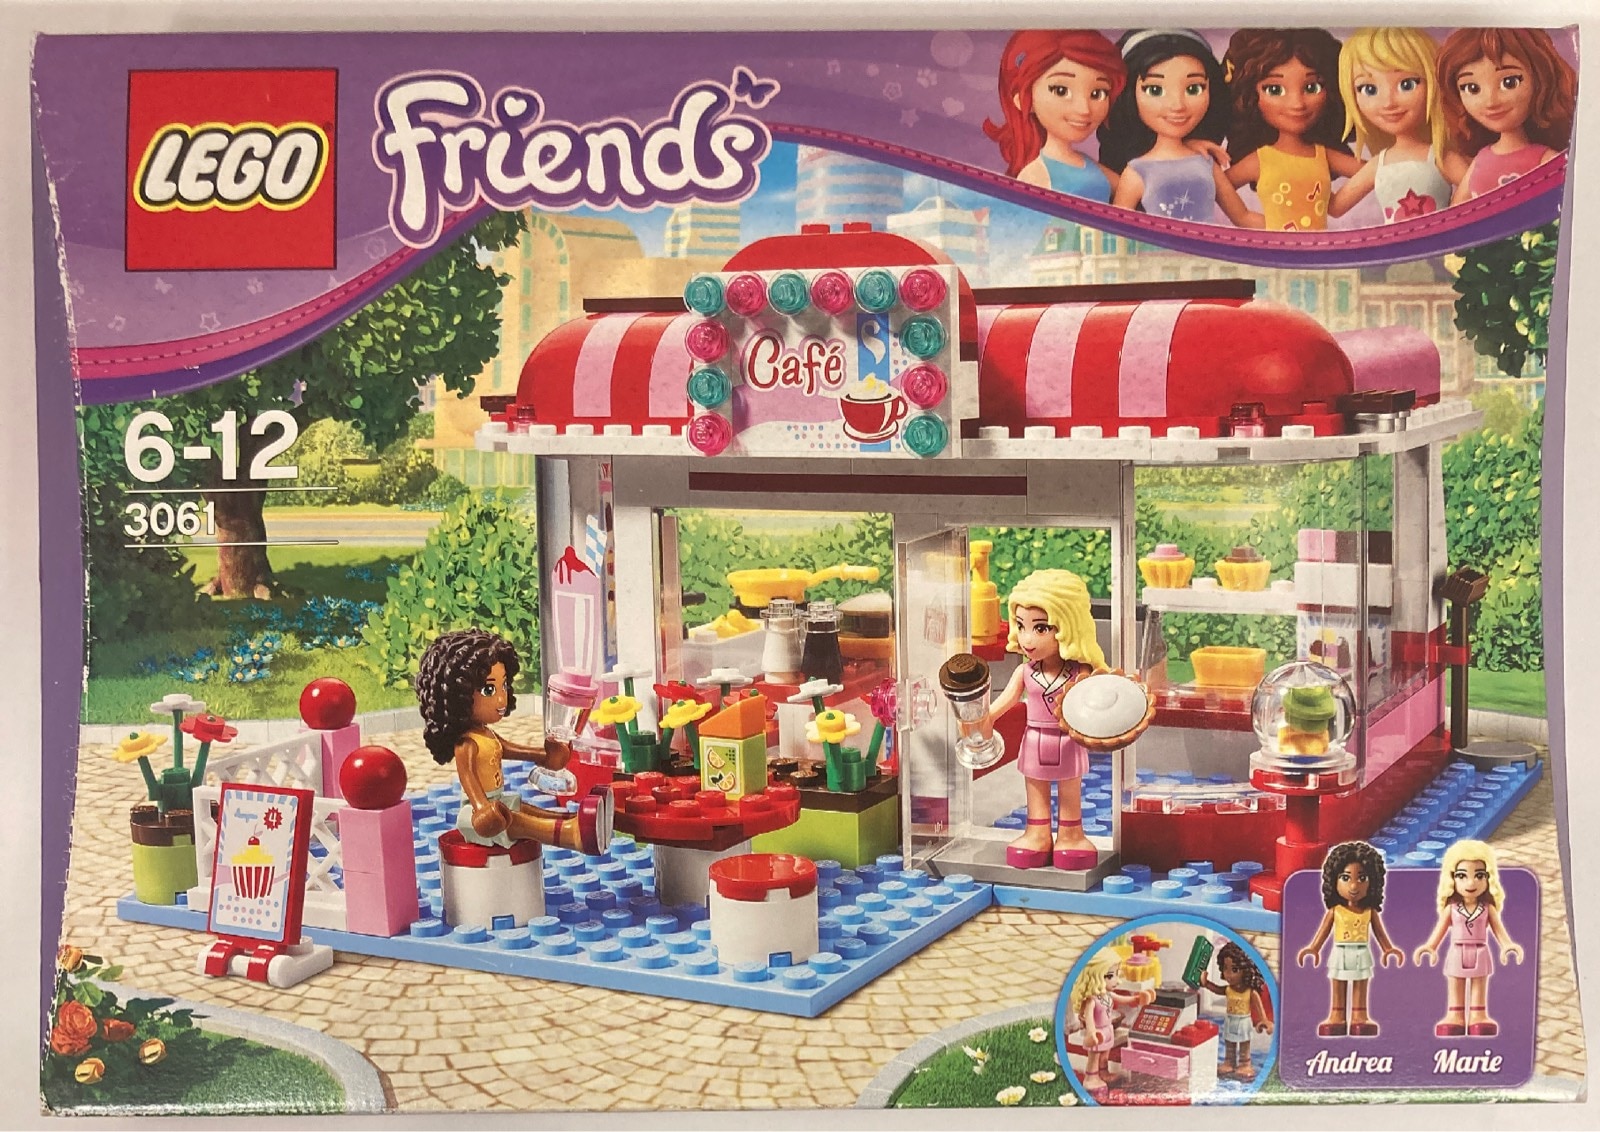 LEGO 3061 Friends City Park Cafe